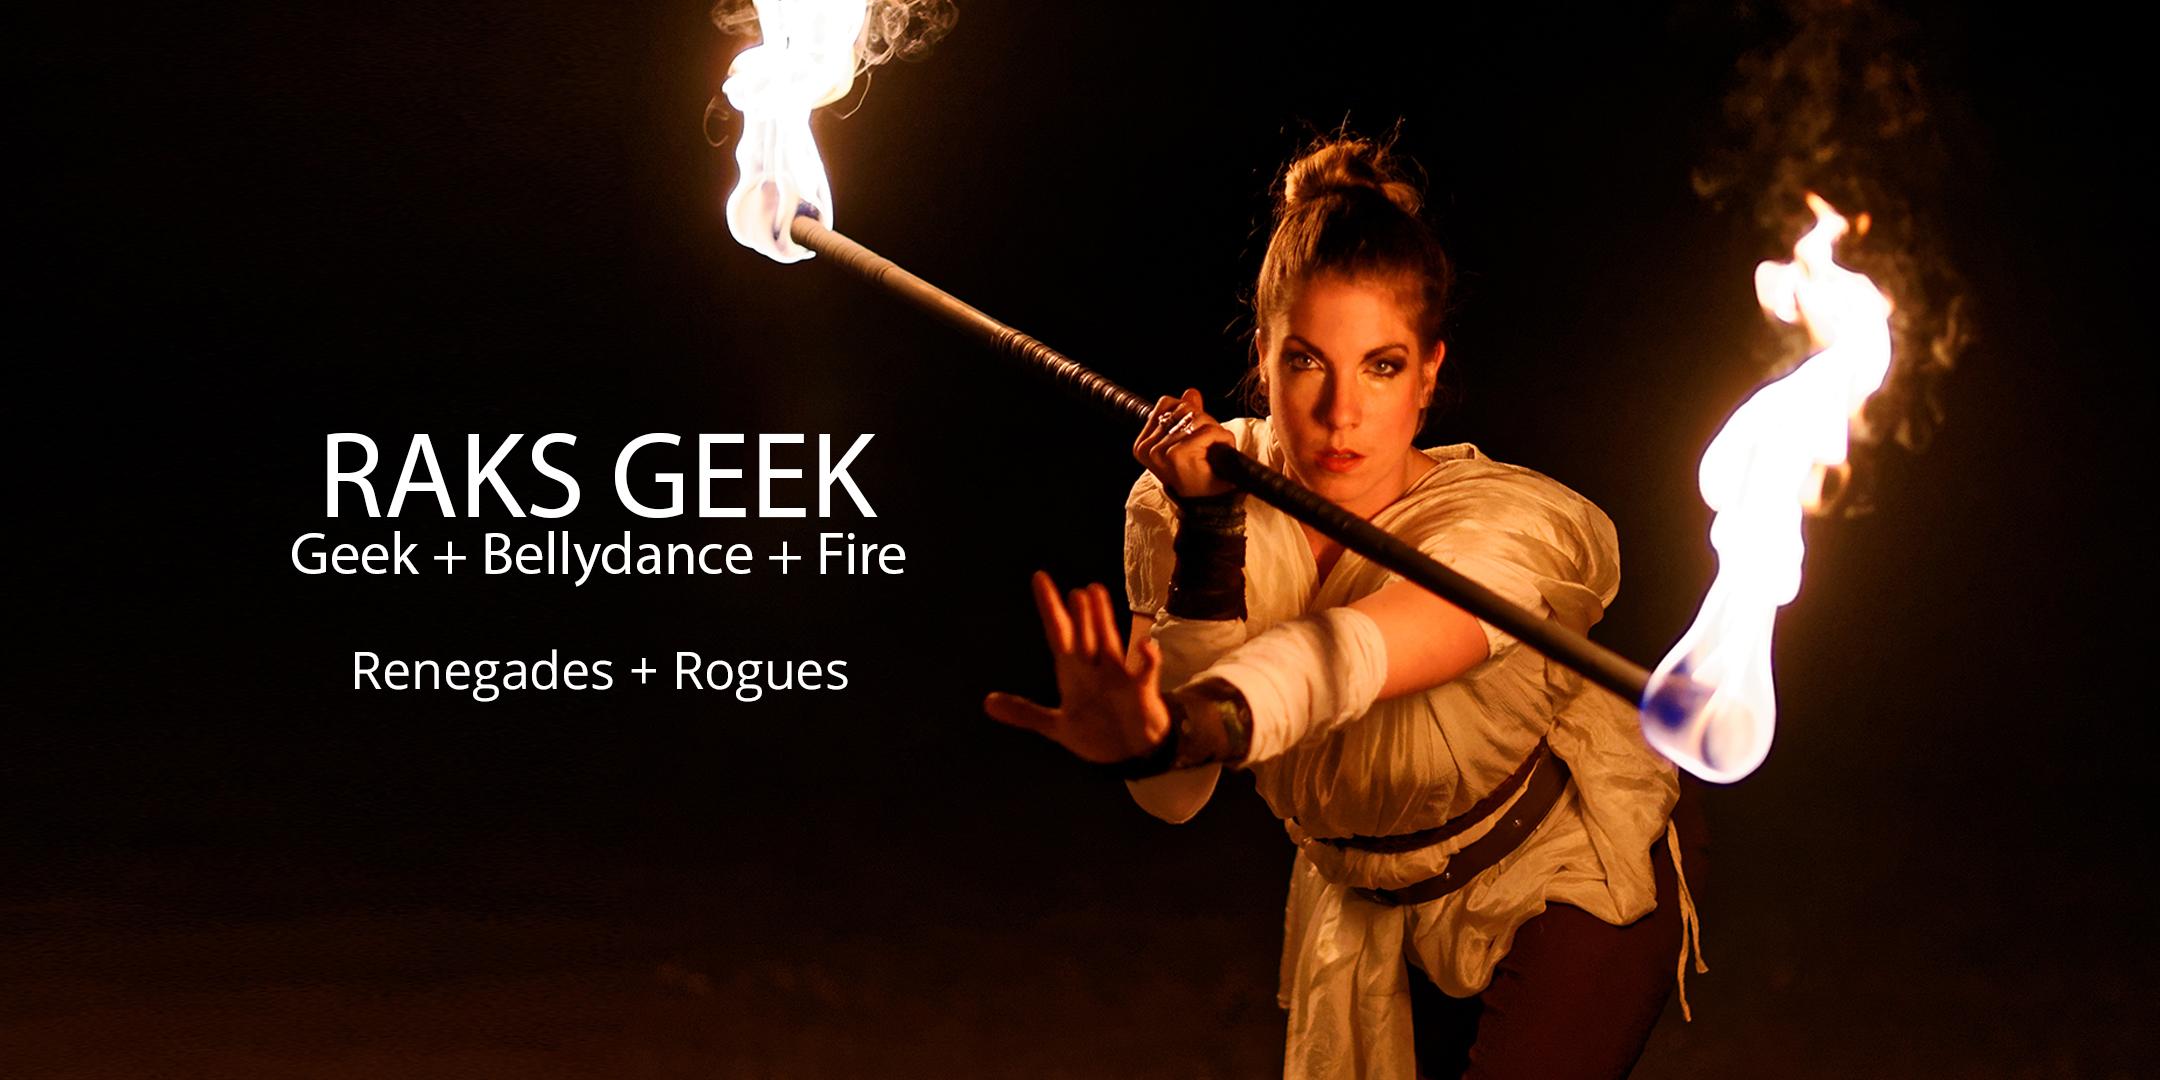 Raks Geek: Renegades + Rogues (CANCELED DUE TO ILLINOIS LOCKDOWN)